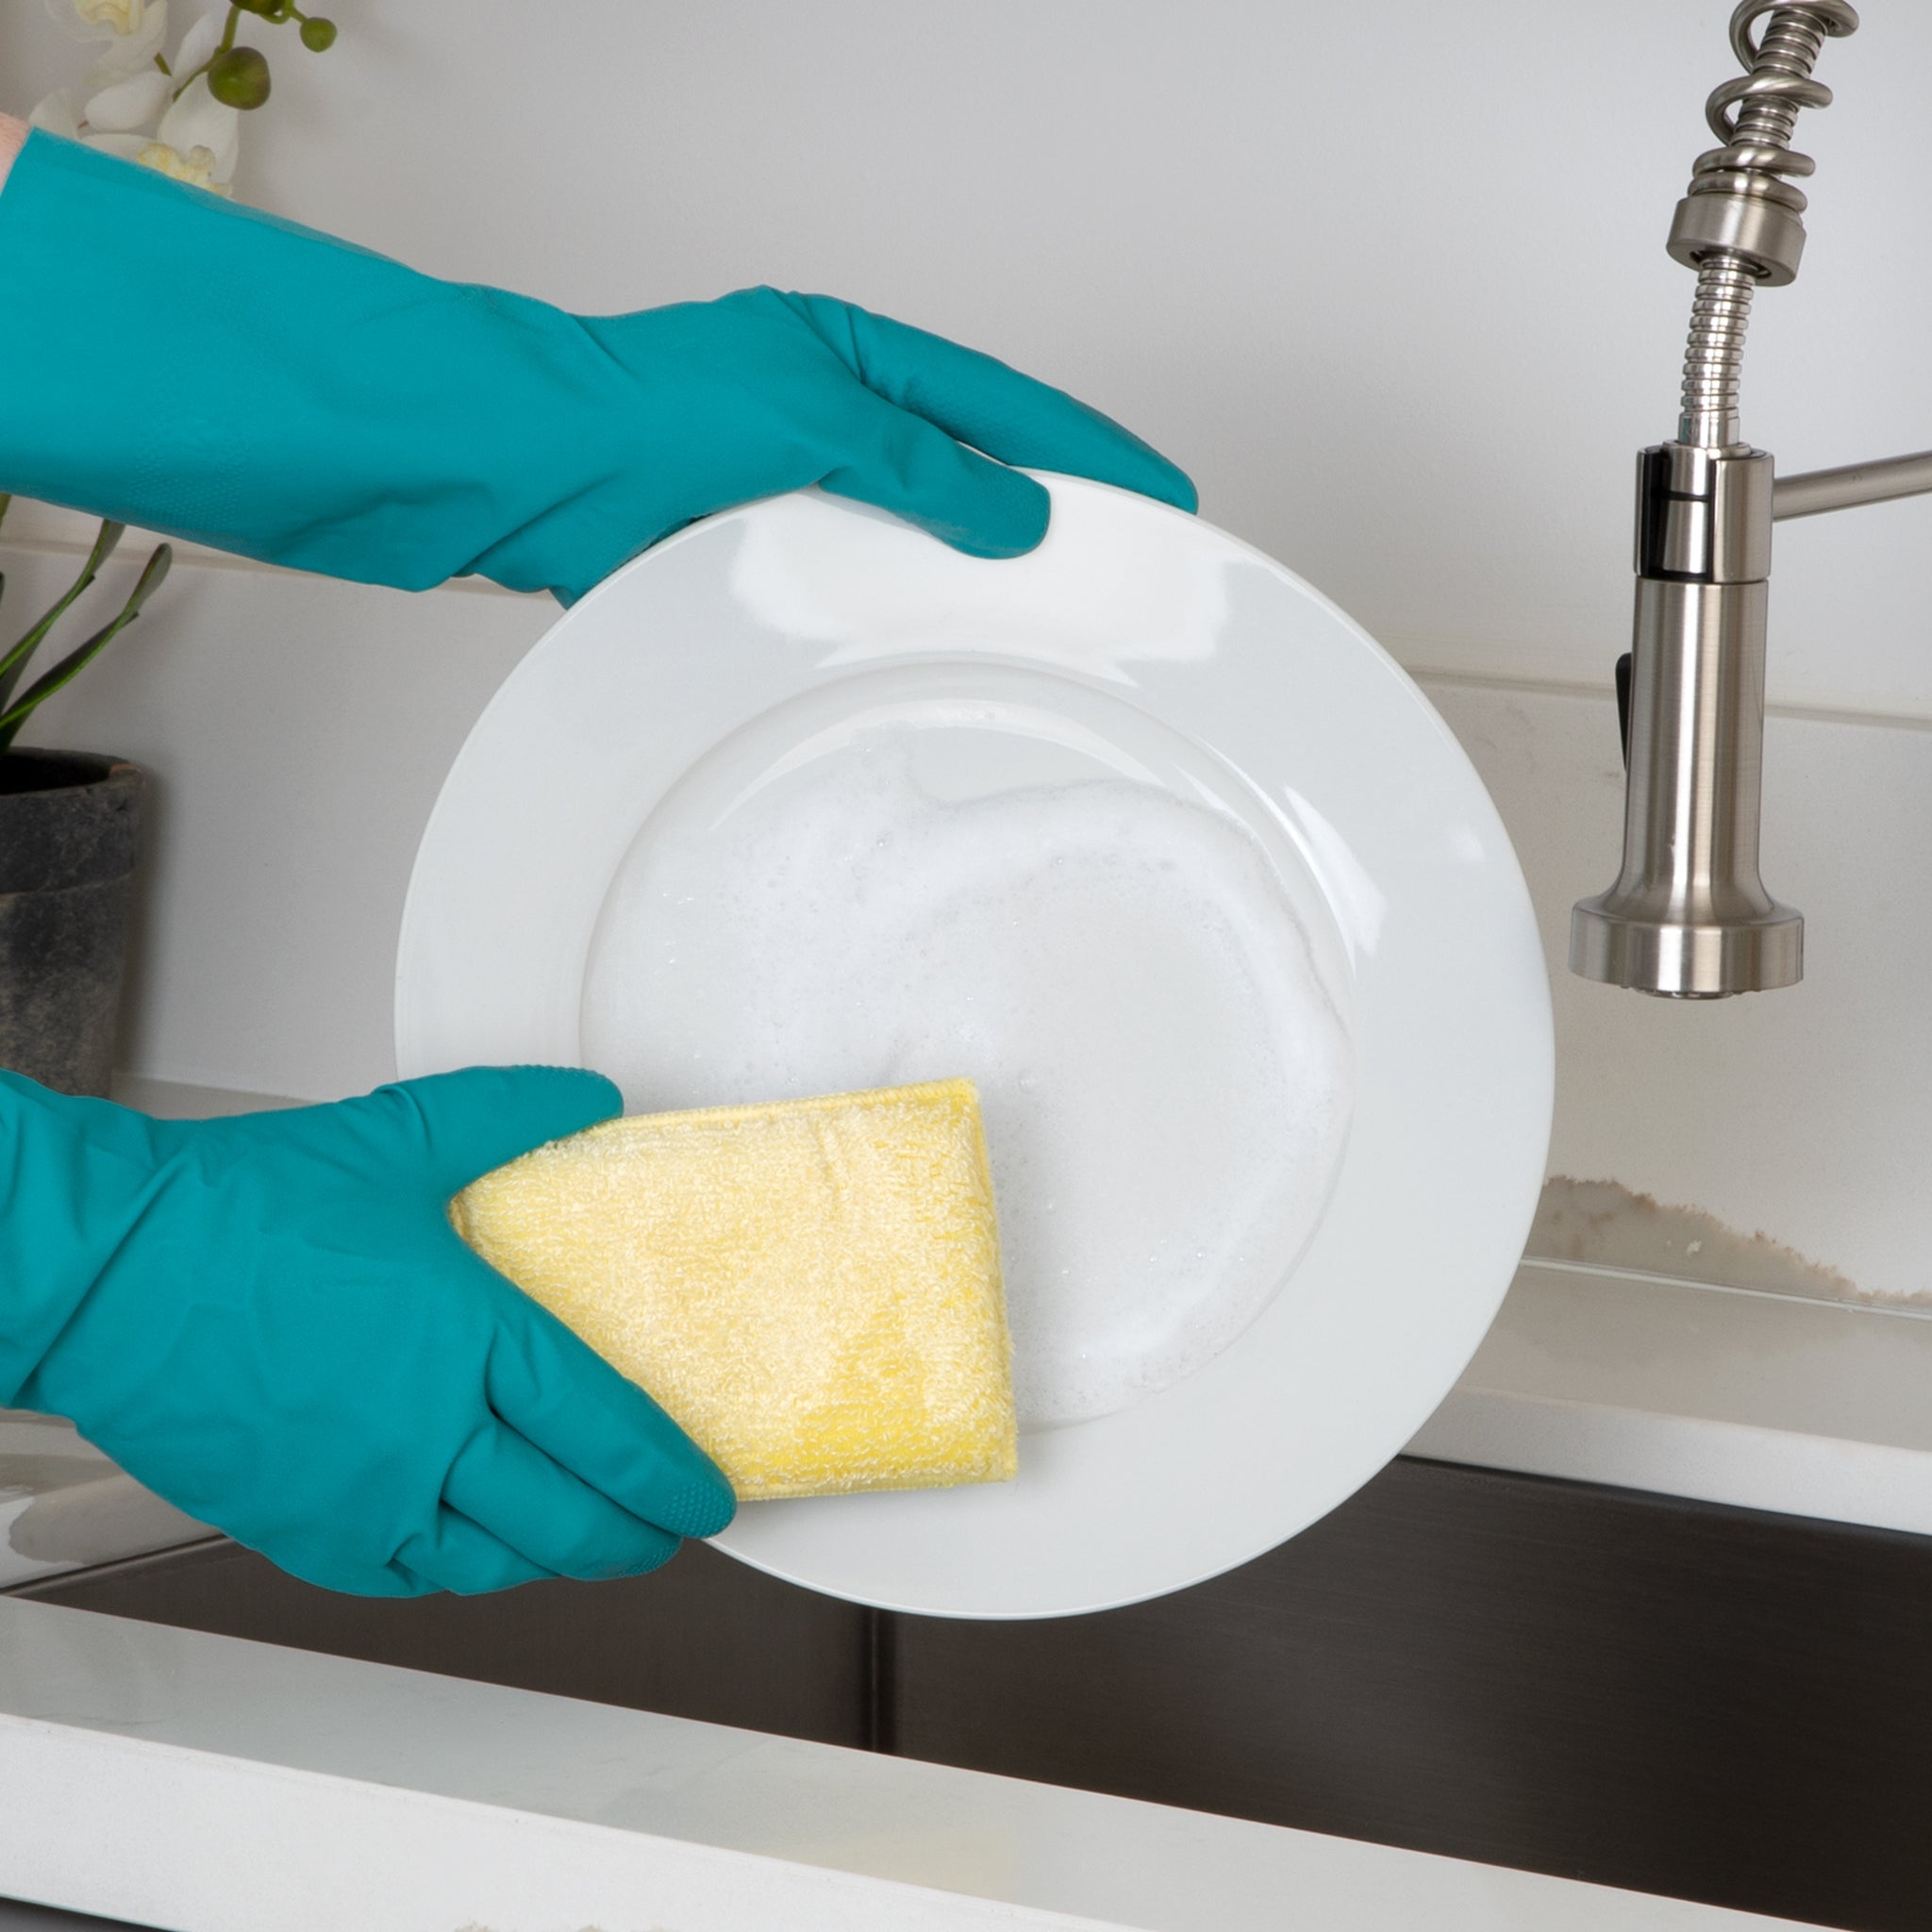 Smart Design Soap Dispensing Dish Sponge with Replaceable Head - Non-Slip  Brush Handle with Soap Reservoir - Odor Resistant - Cleaning Pots, Pans